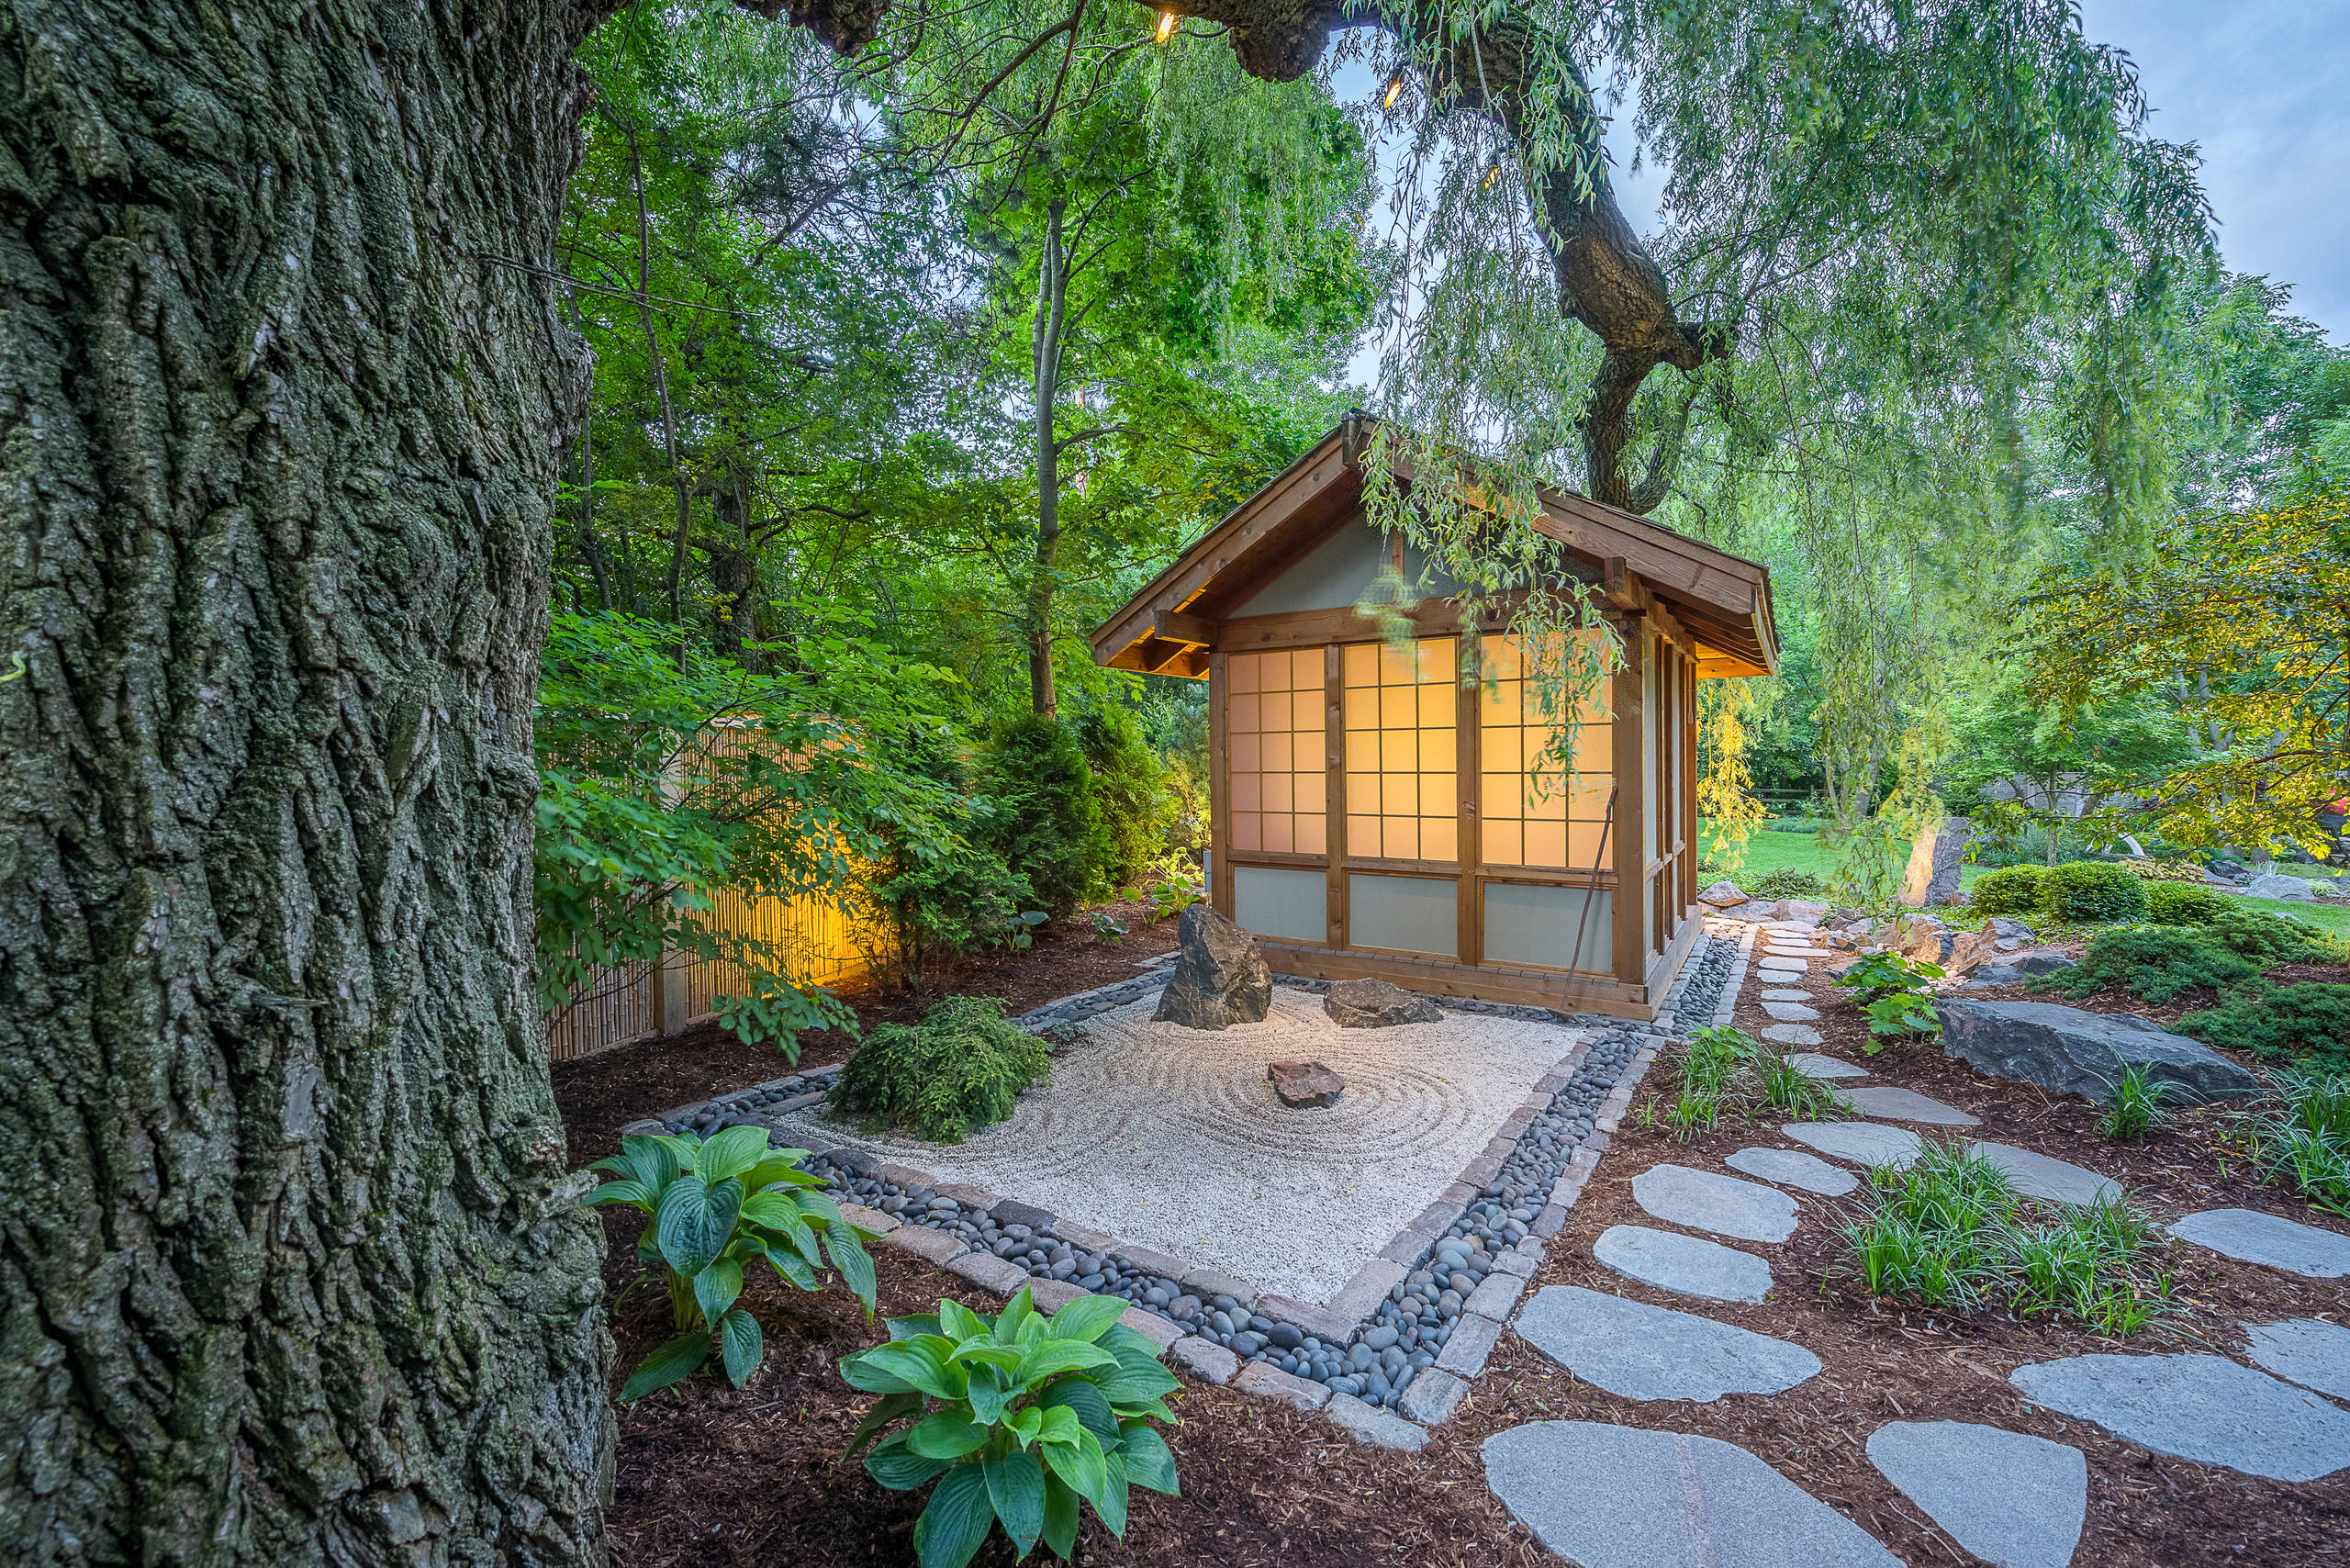 75 Beautiful Backyard Design Houzz Pictures Ideas June